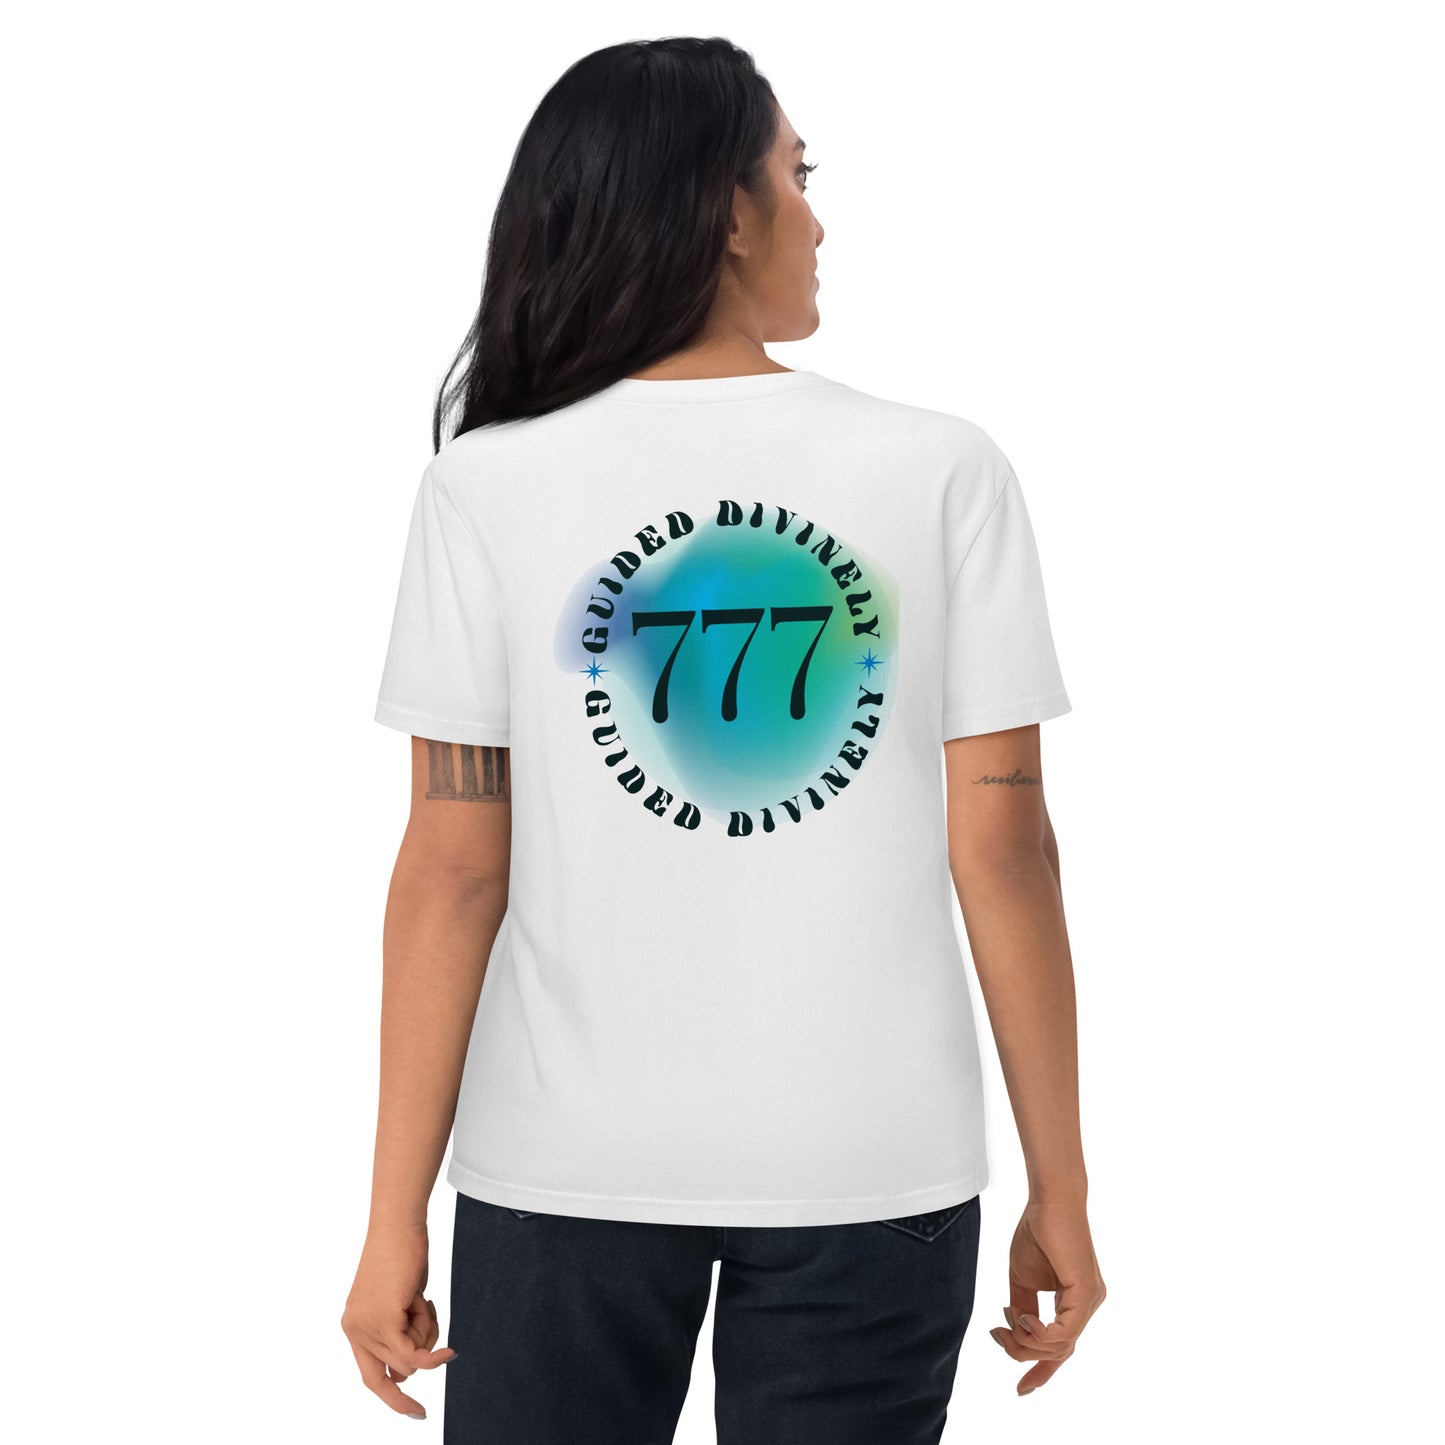 777 Lucky Number Unisex organic cotton spiritual t-shirt